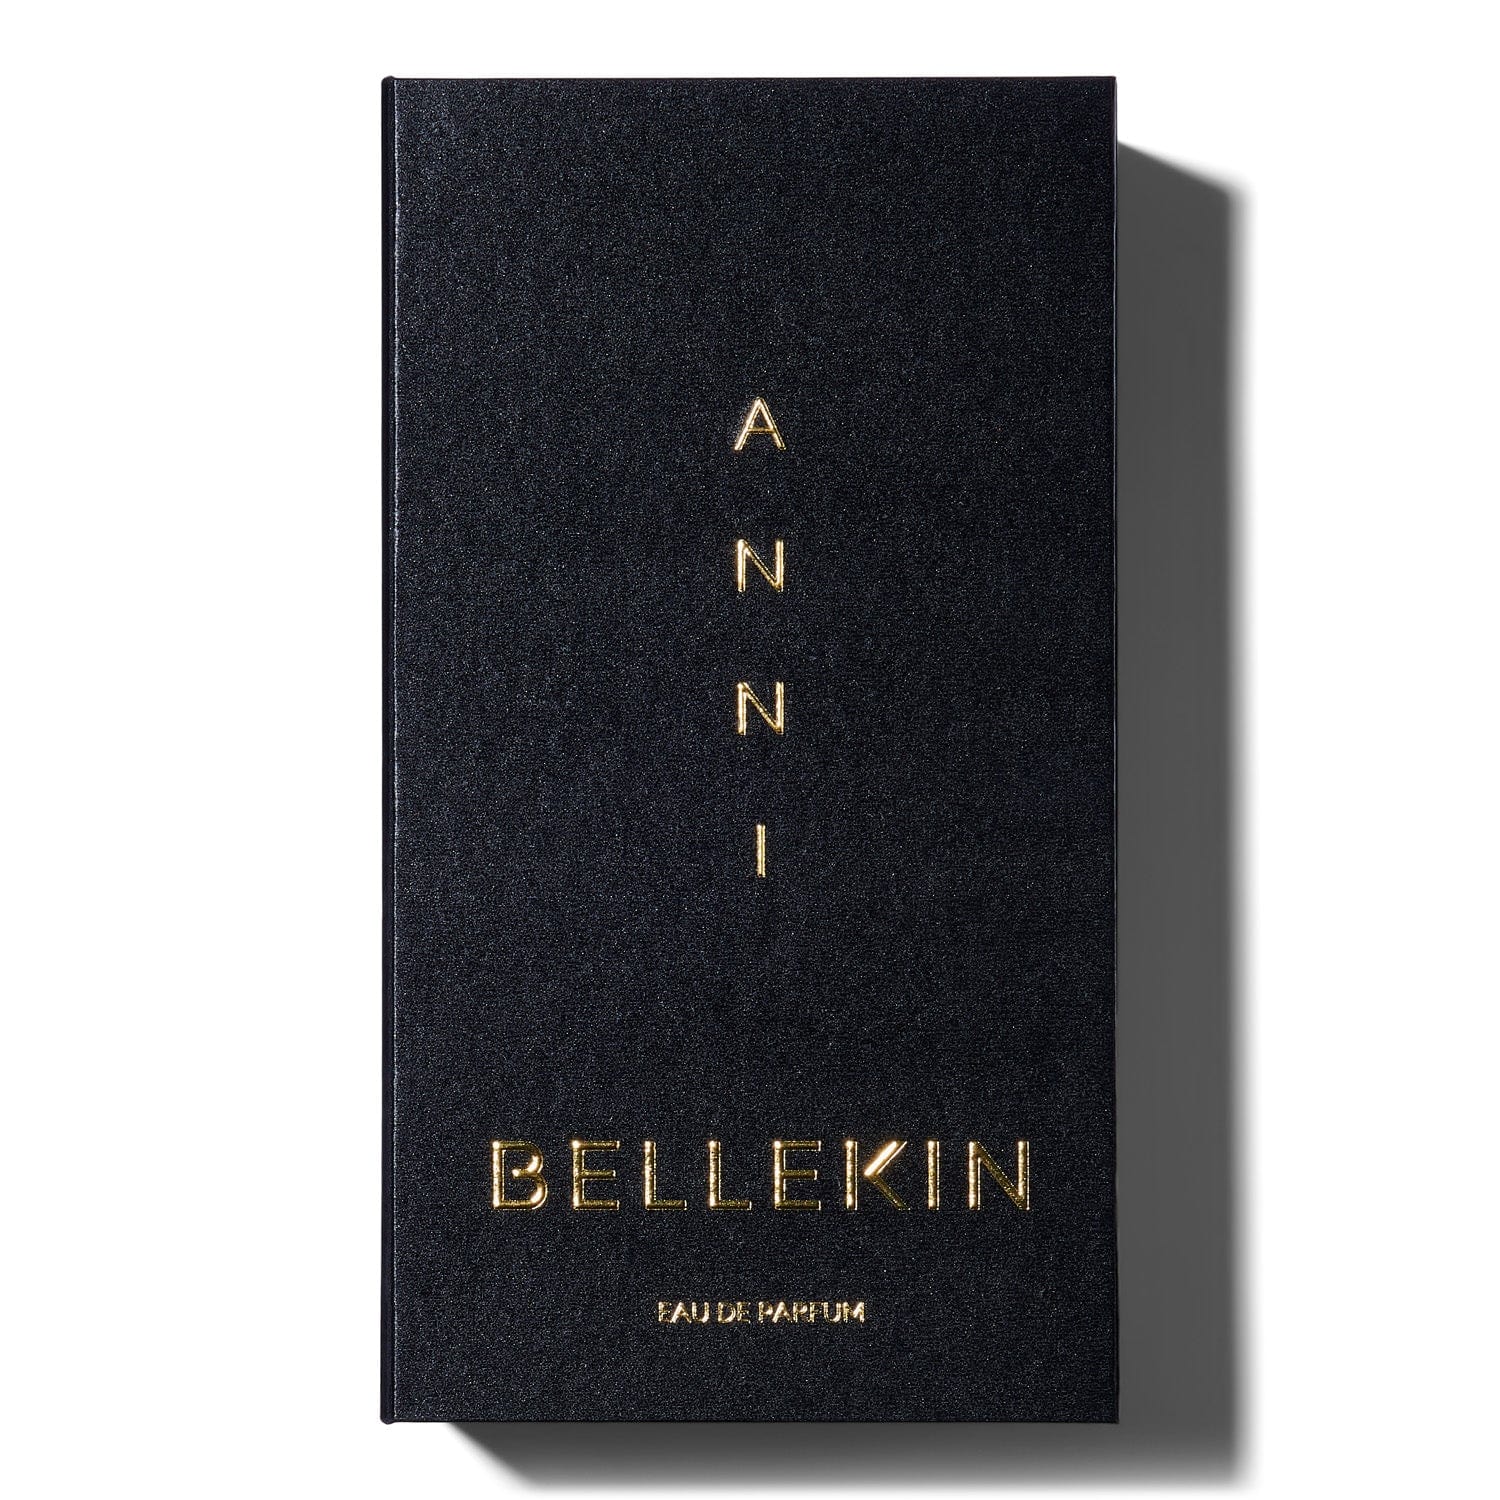 Bellekin.com Perfume ANNI